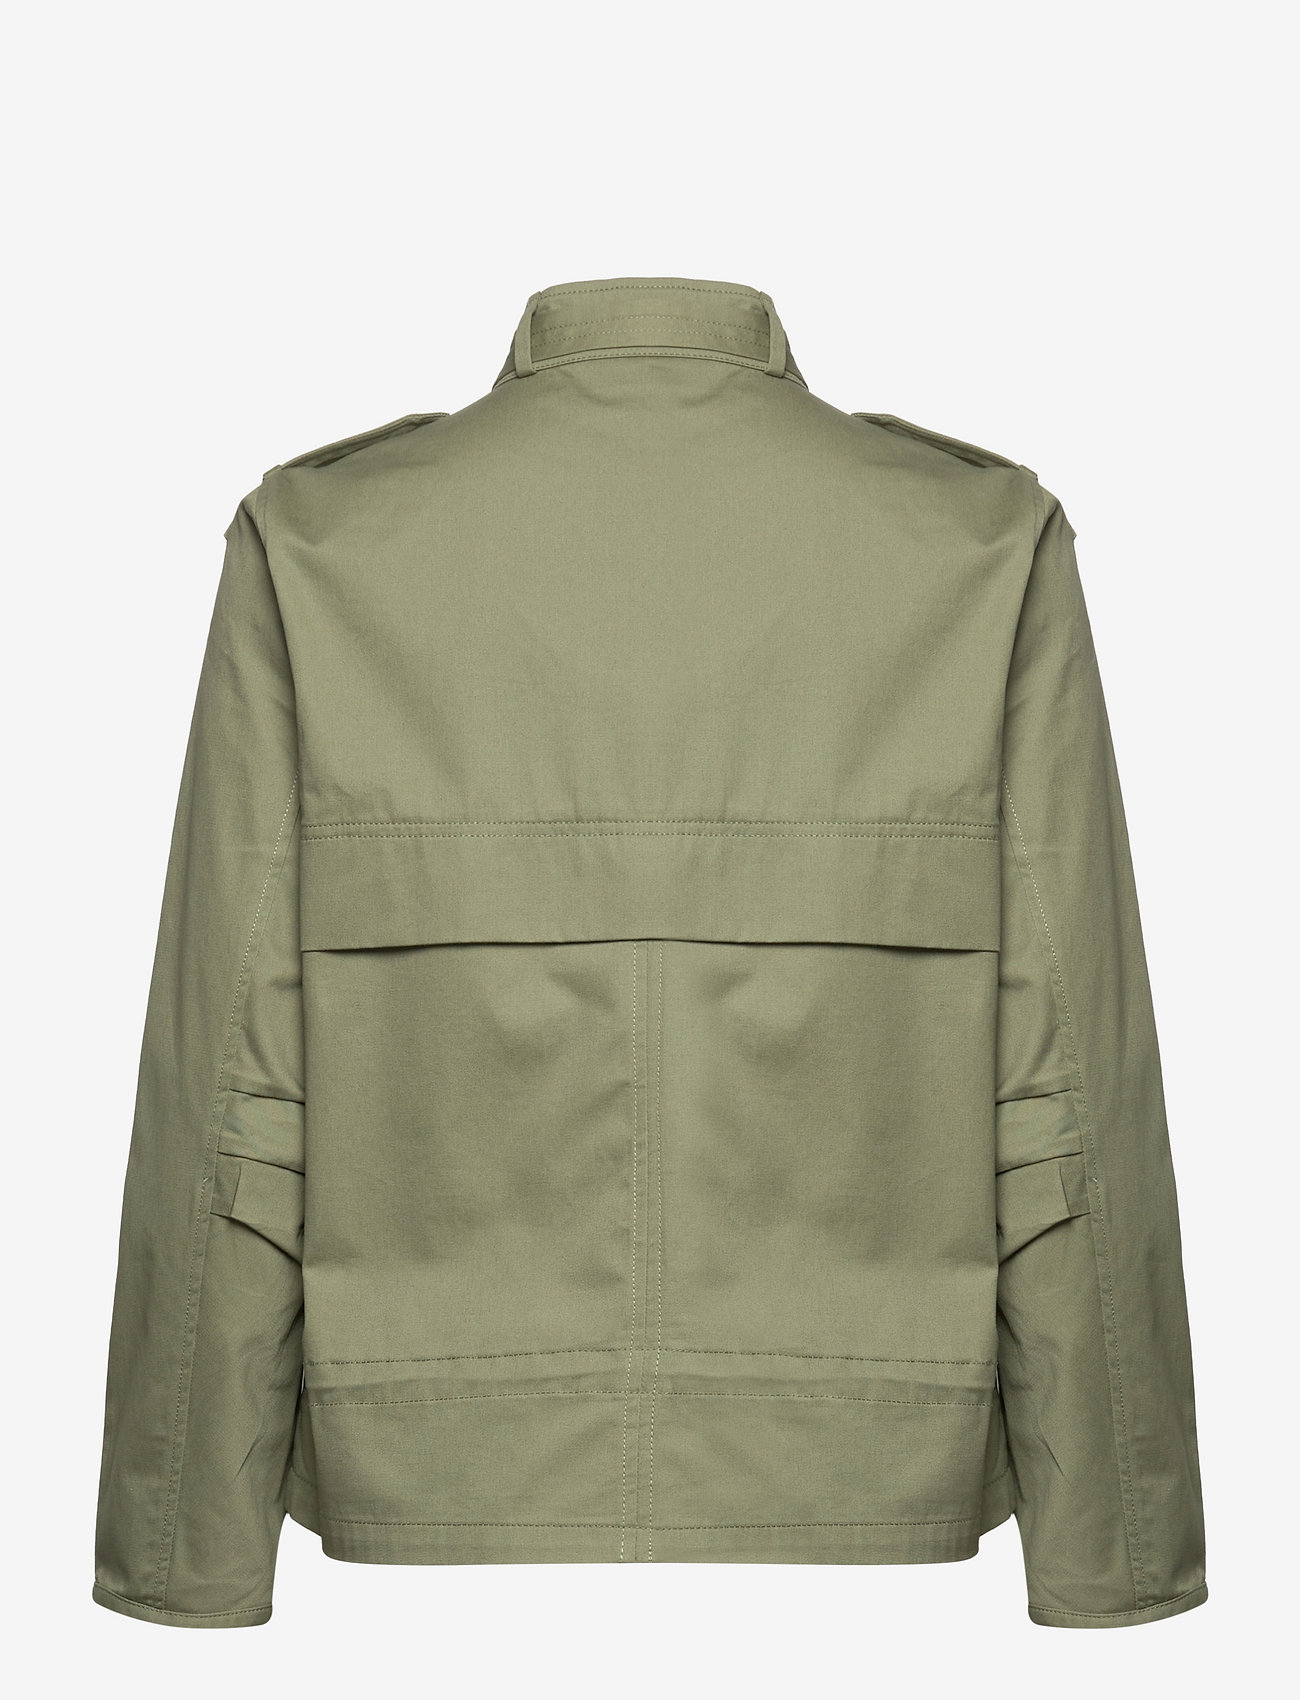 Esprit Casual - Outdoor jacket - utilityjackor - light khaki - 1